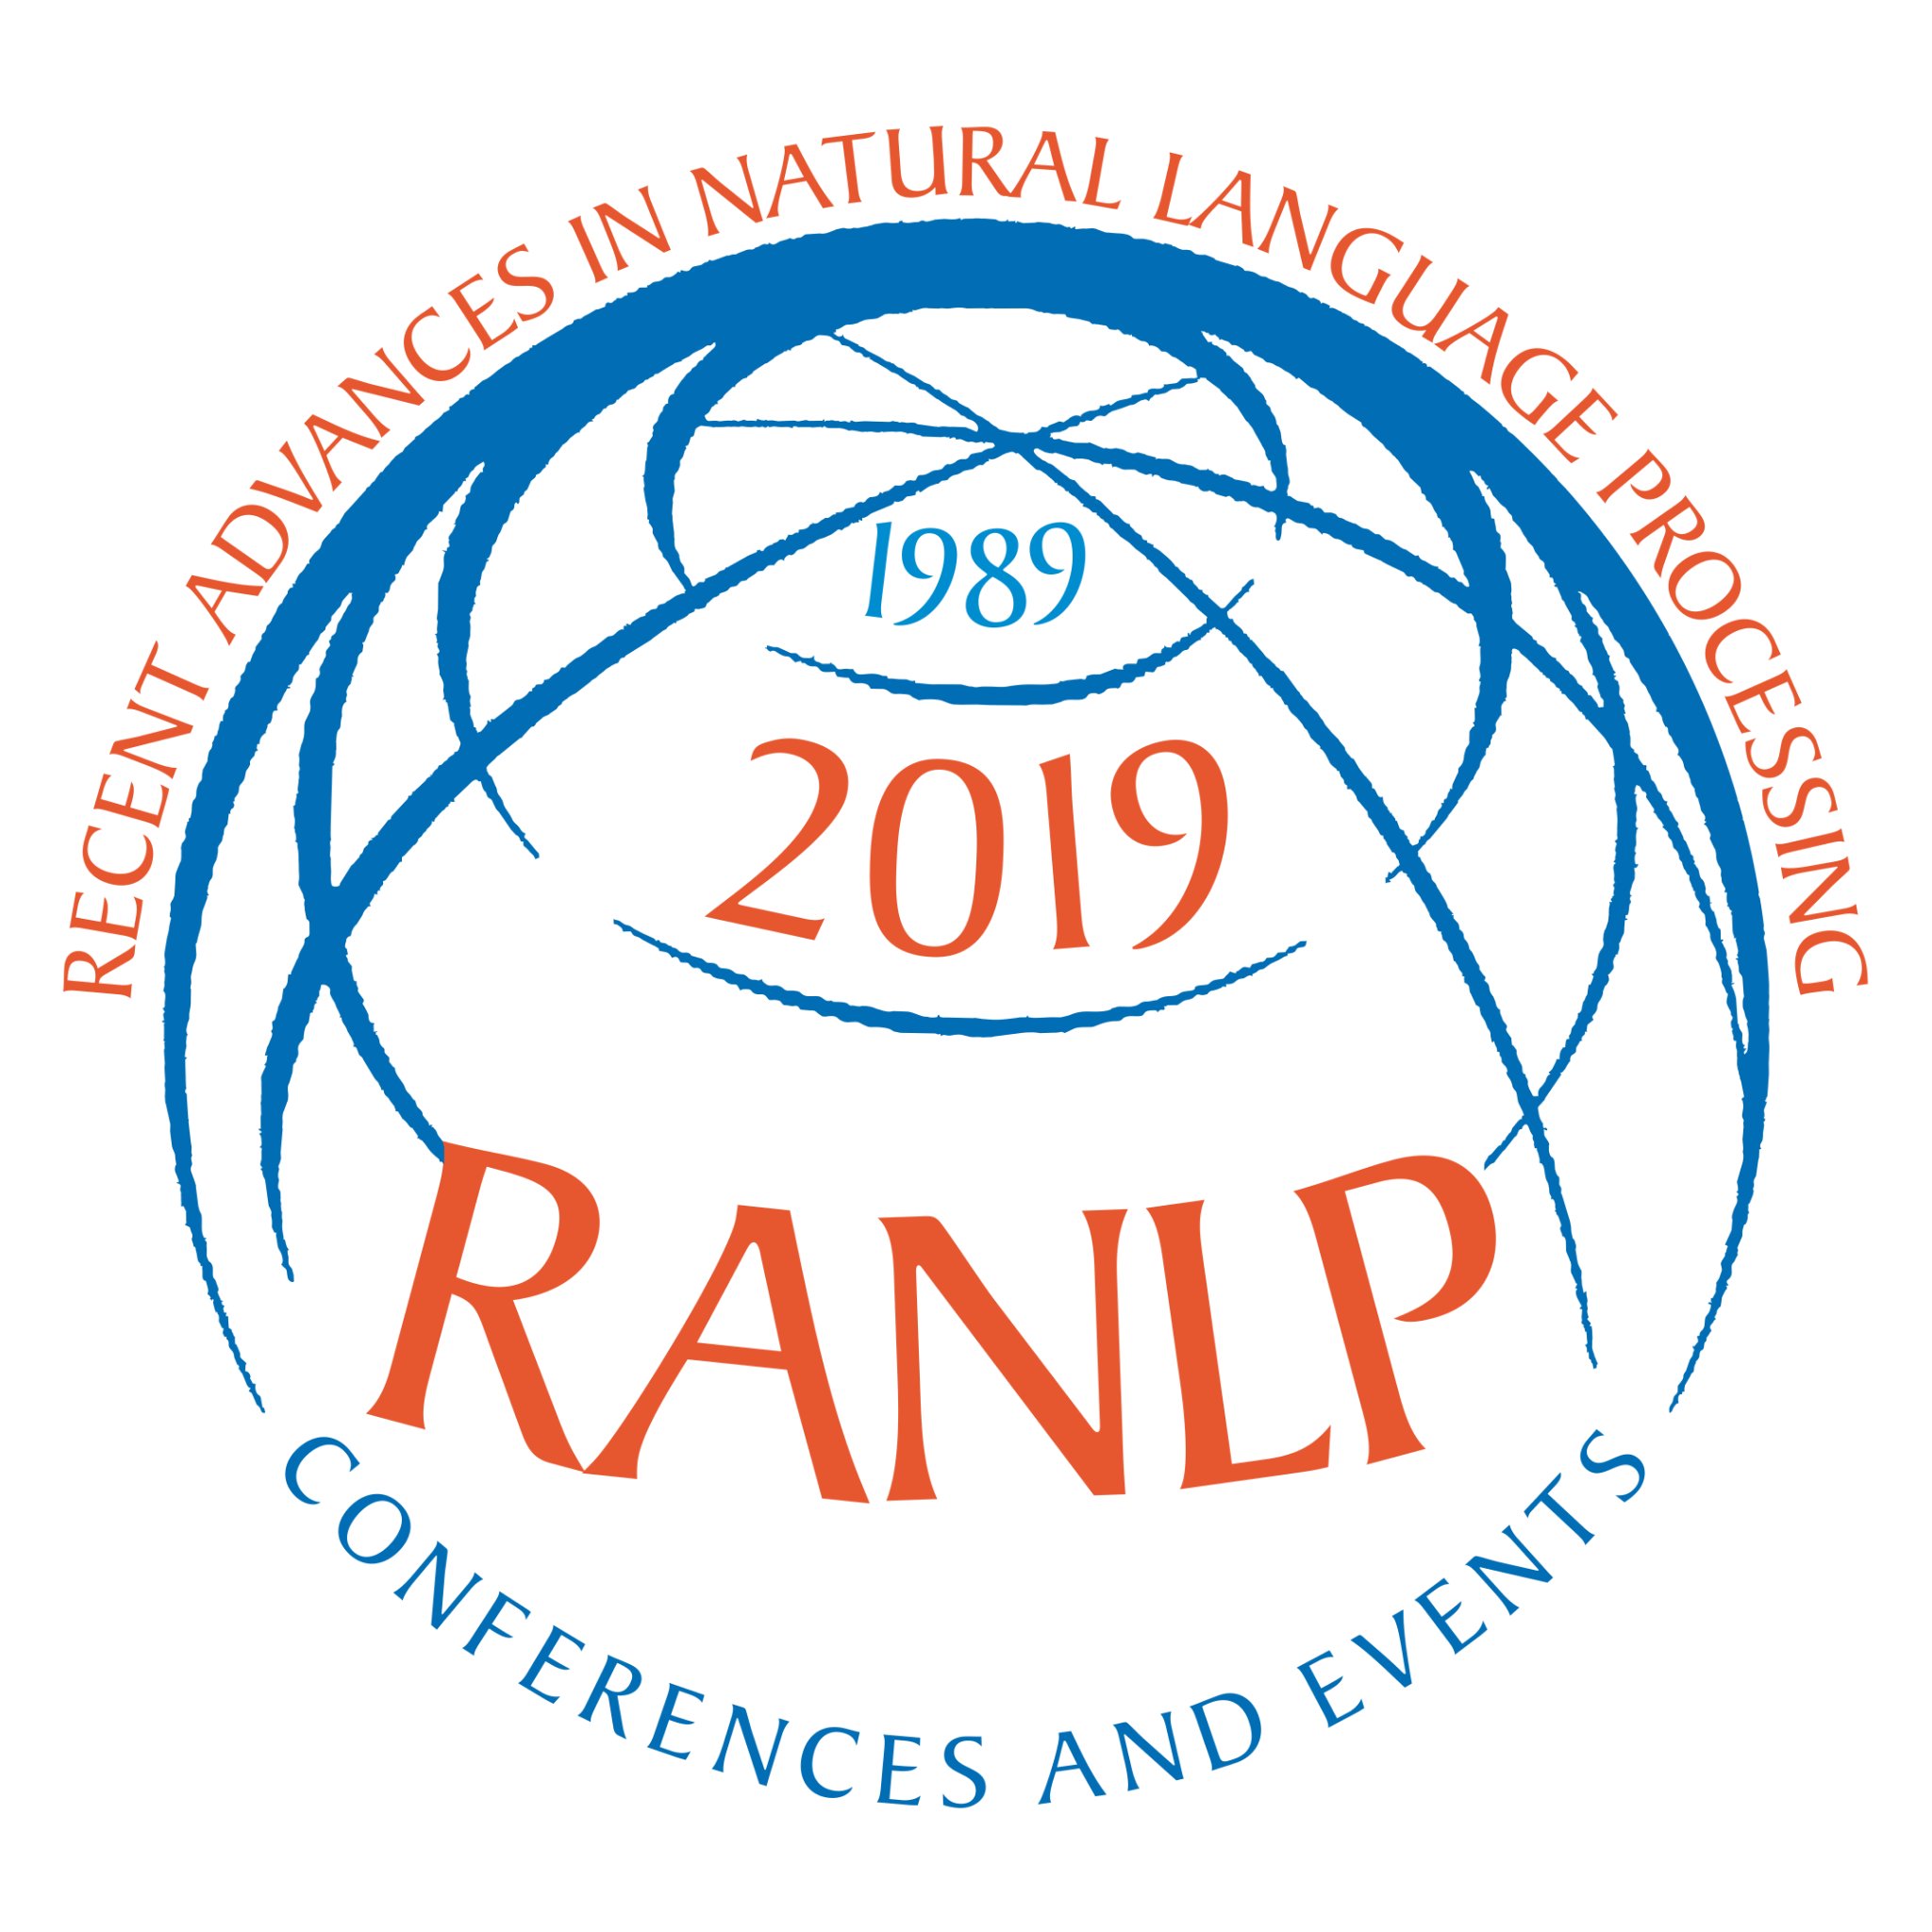 Conference Recent Advances in Natural Language Processing (RANLP2019). September 2019 Varna, Bulgaria.